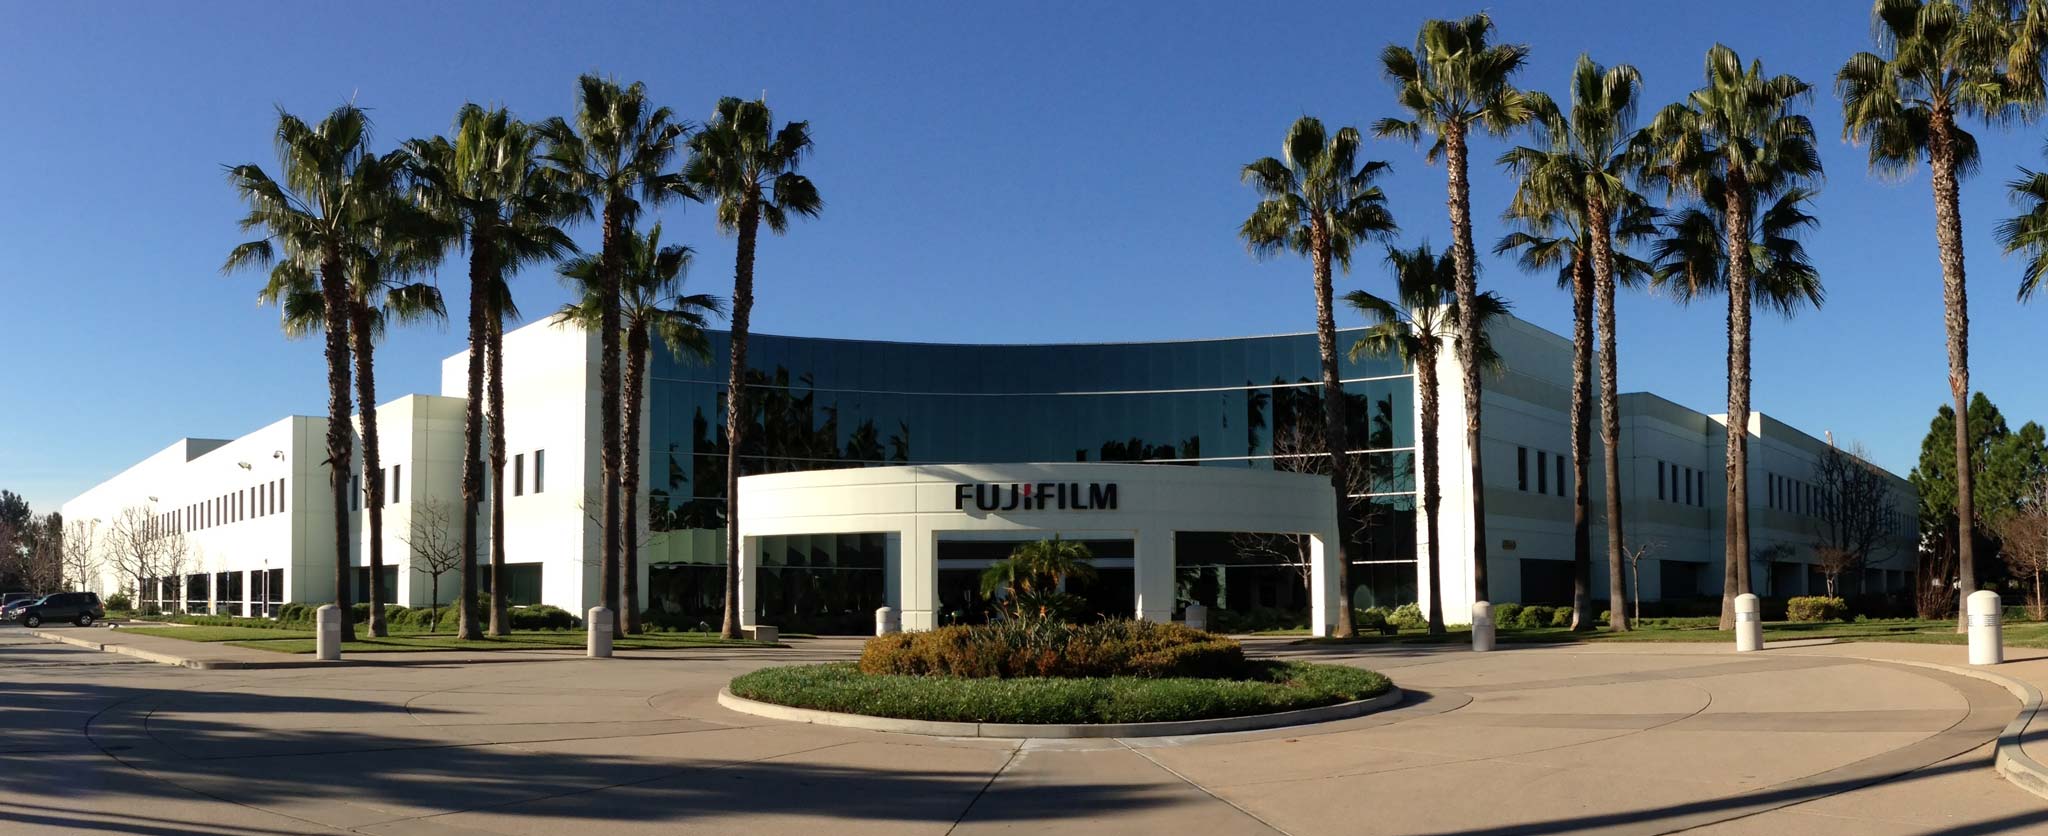 Fujifilm-Fujinon-Cypress-CA-fdt